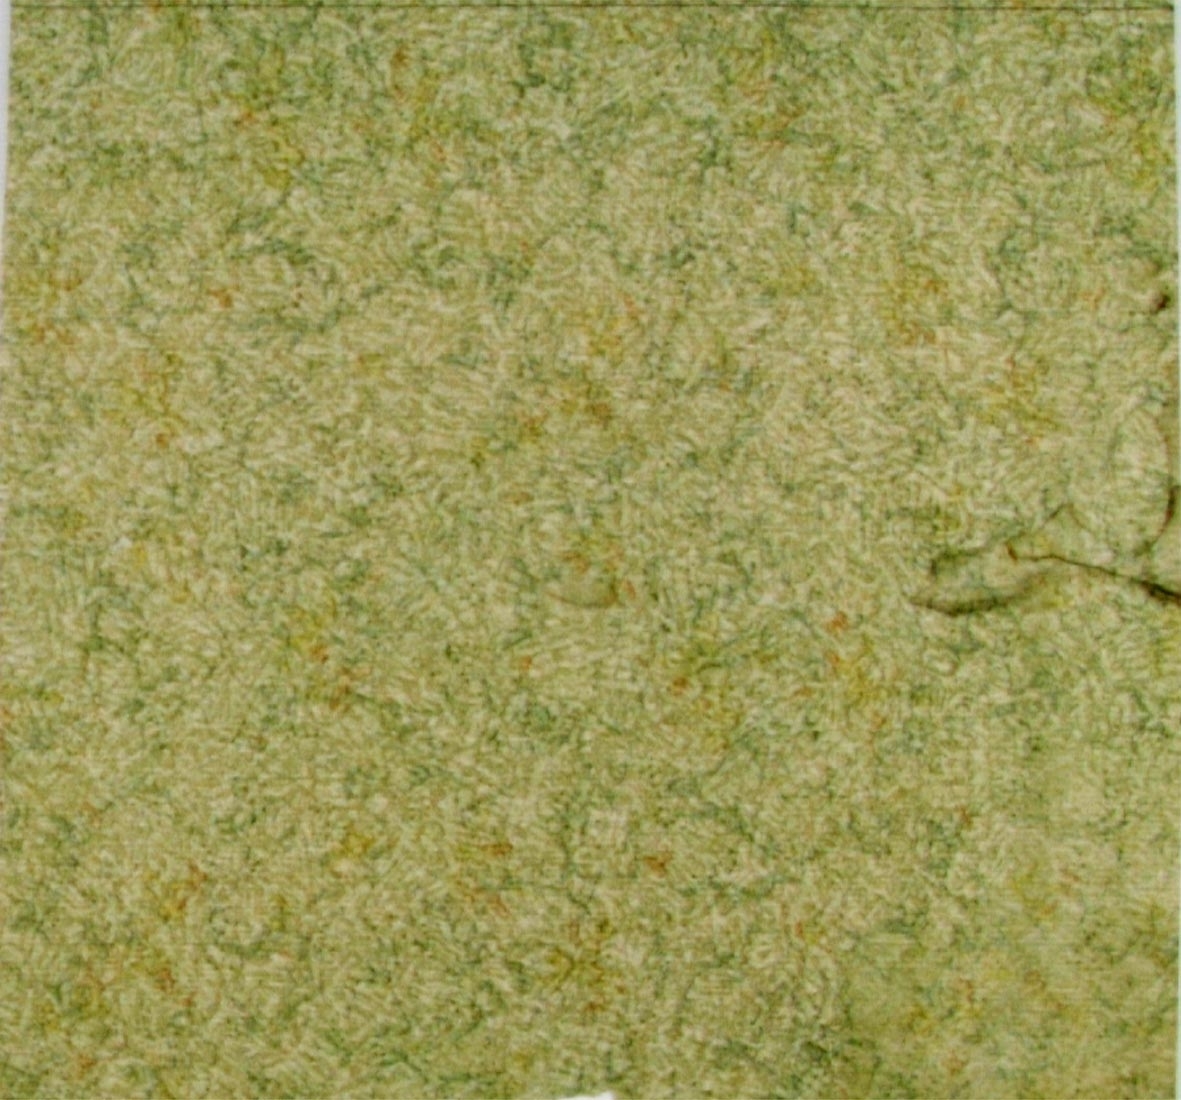 Indifferent mönster i gulgröna nyanser.